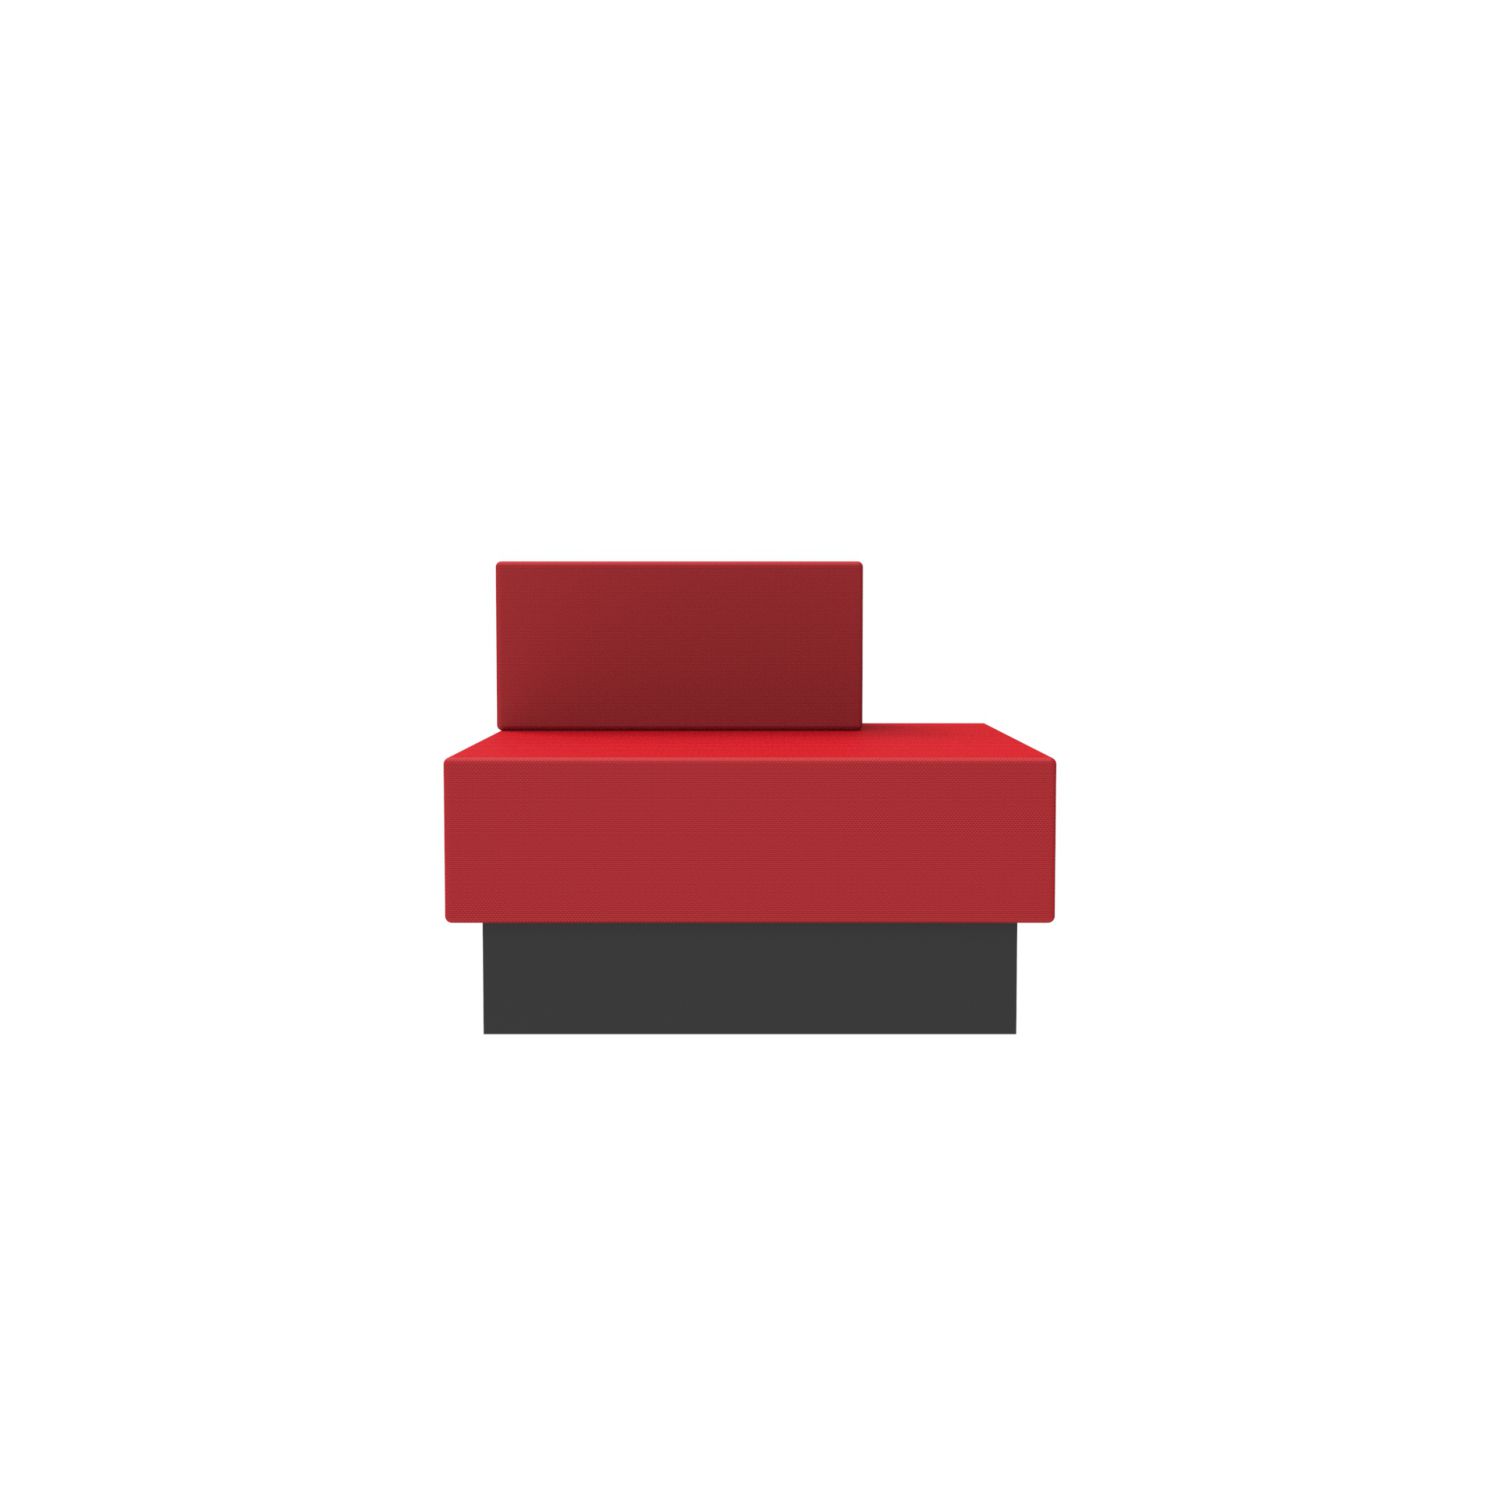 lensvelt oma blocks lounging edition closed base with backrest right 90 cm width grenada red 010 black ral9005 hard leg ends